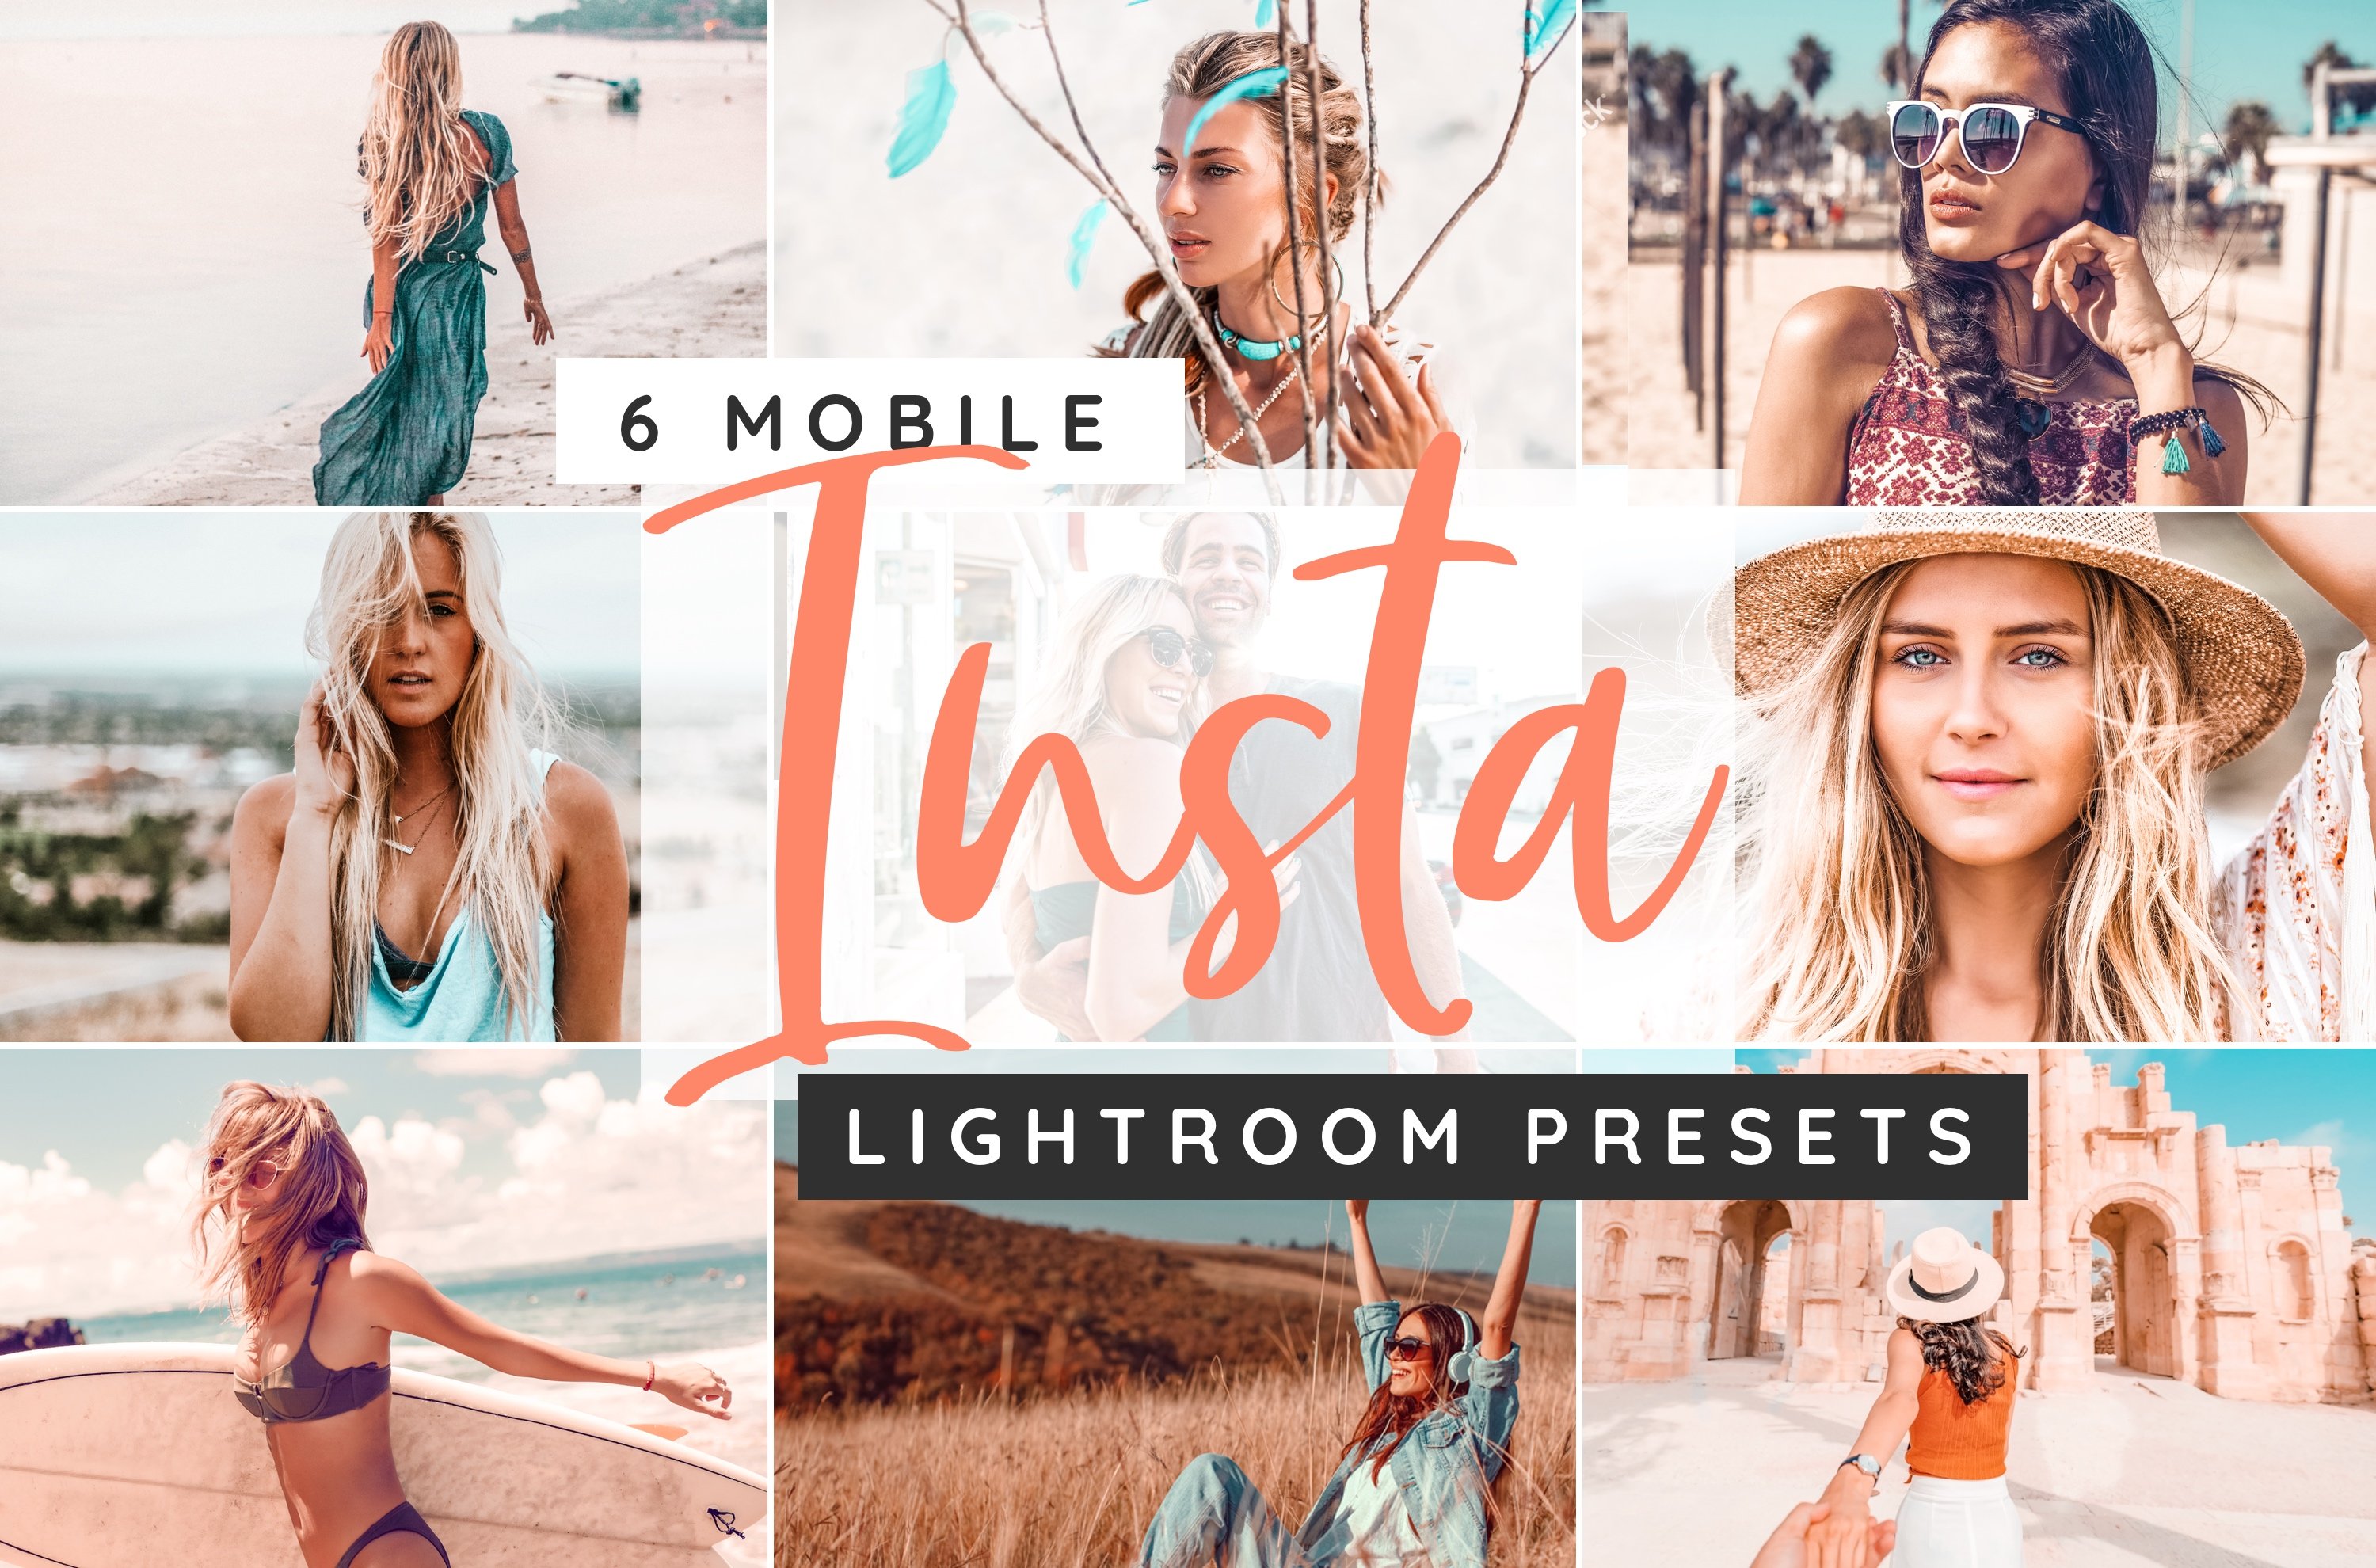 Insta mobile Lightroom presetscover image.